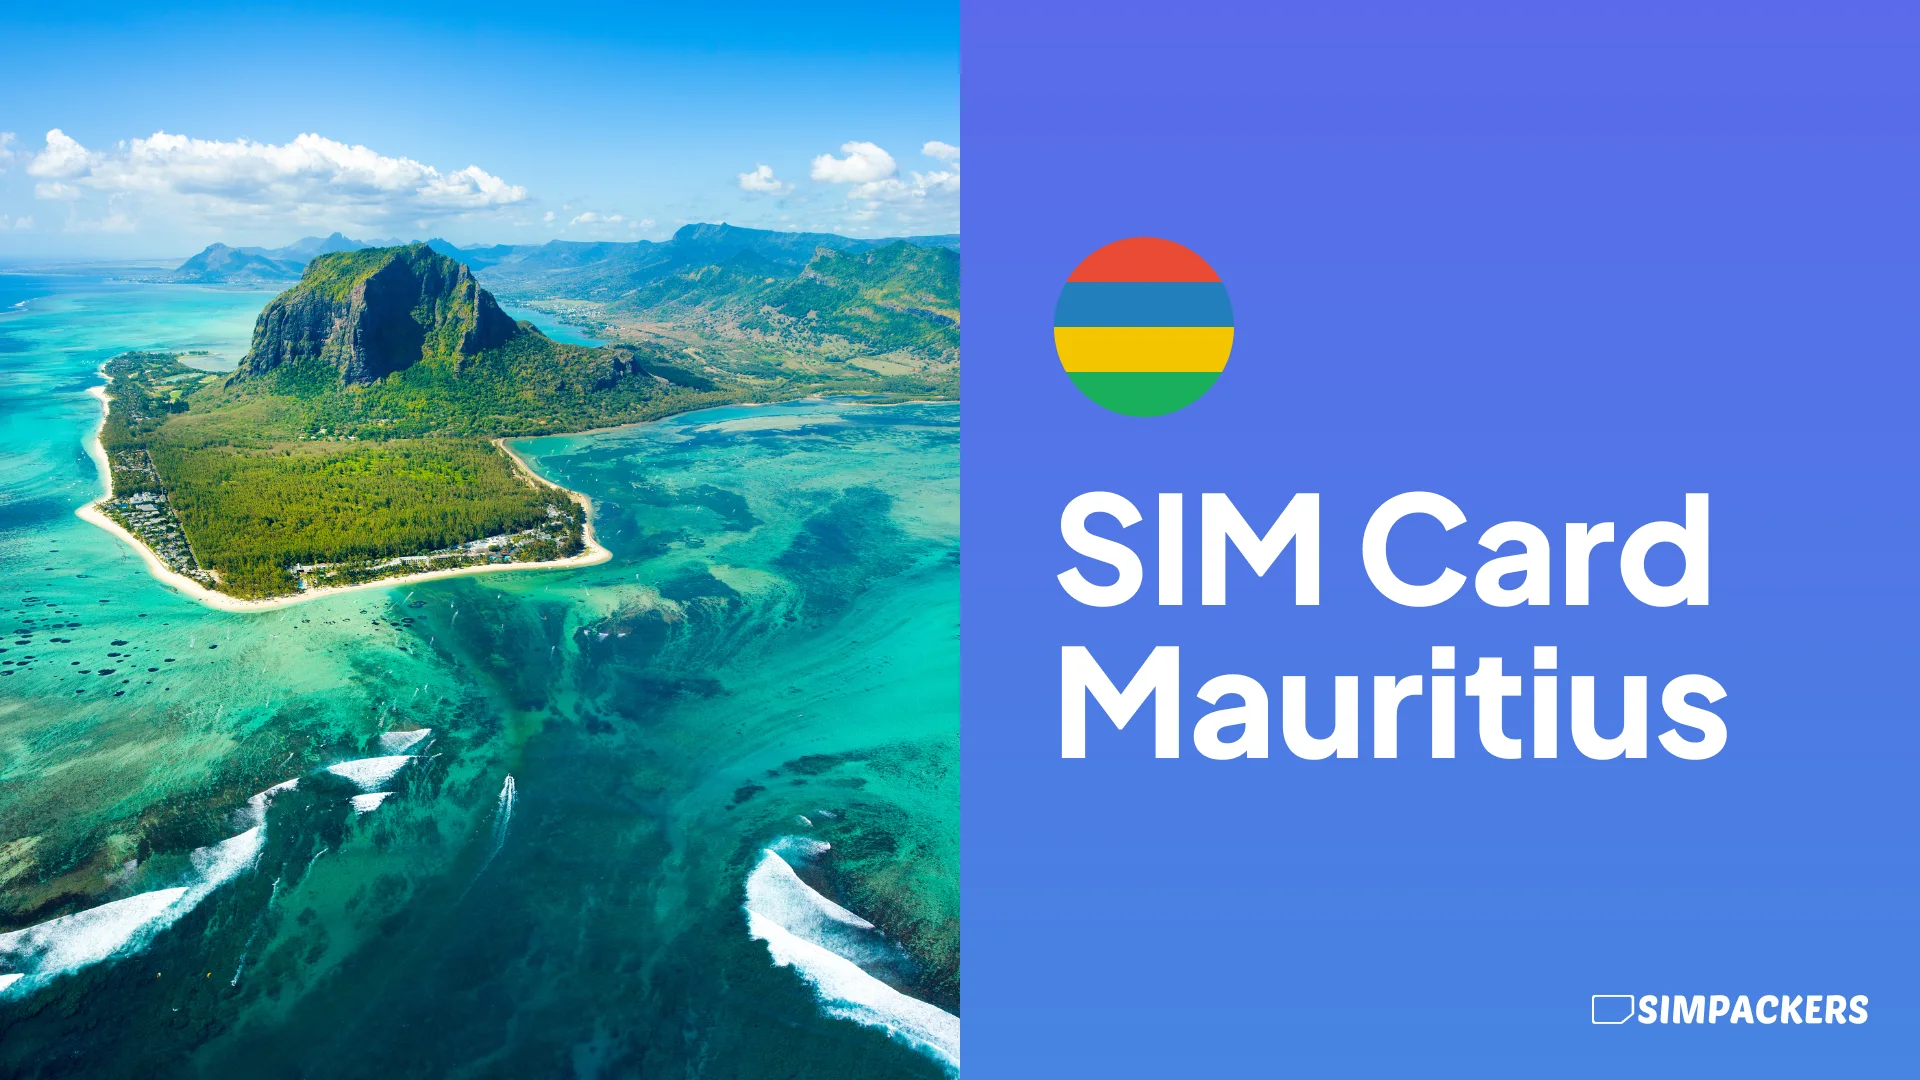 EN/FEATURED_IMAGES/sim-card-mauritius.webp